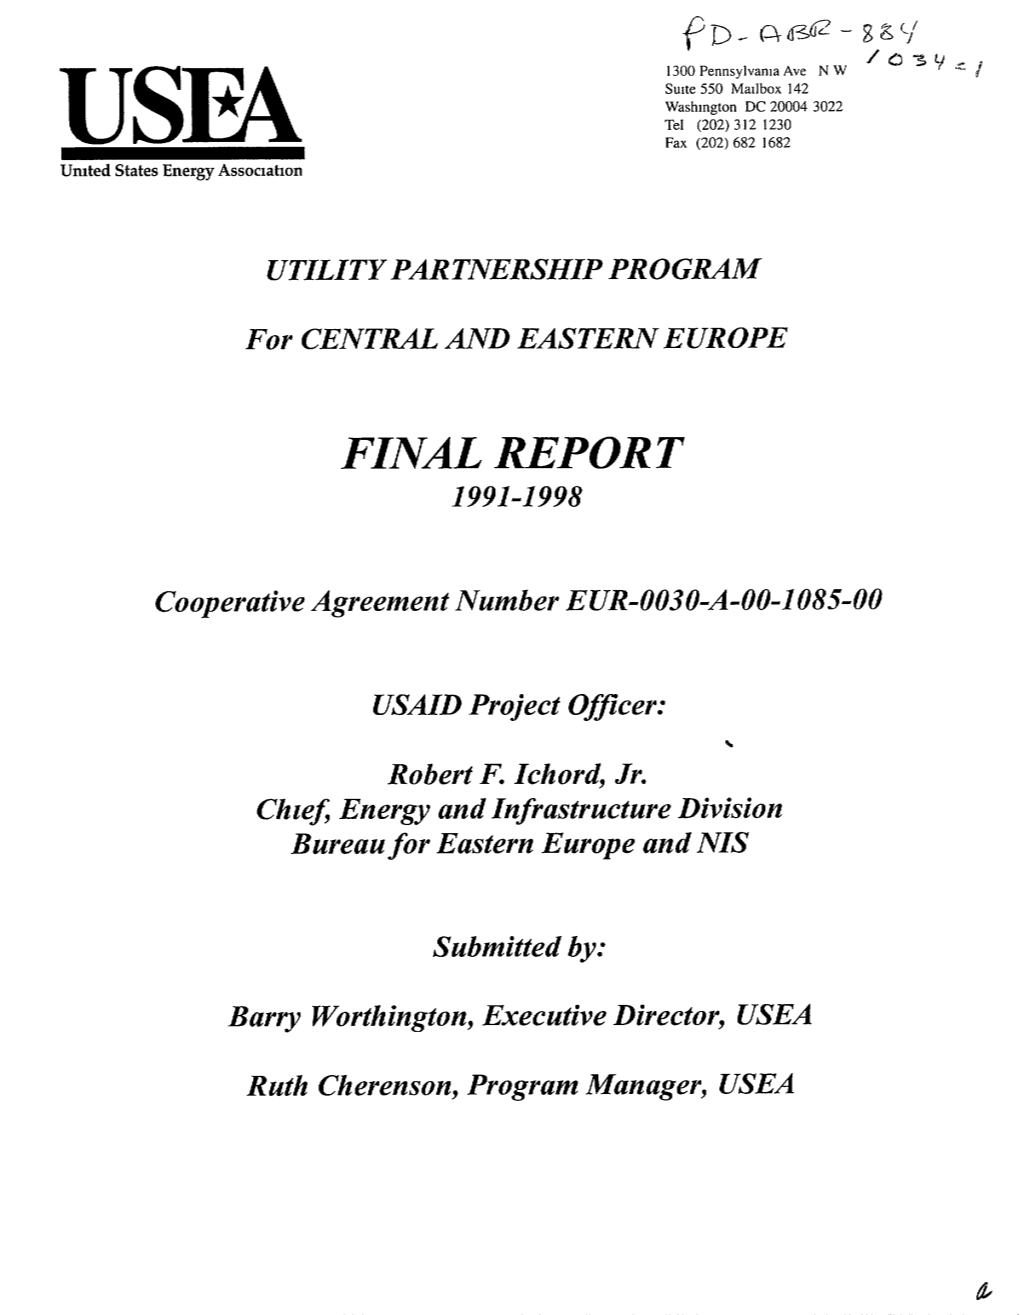 Final Report 1991-1998